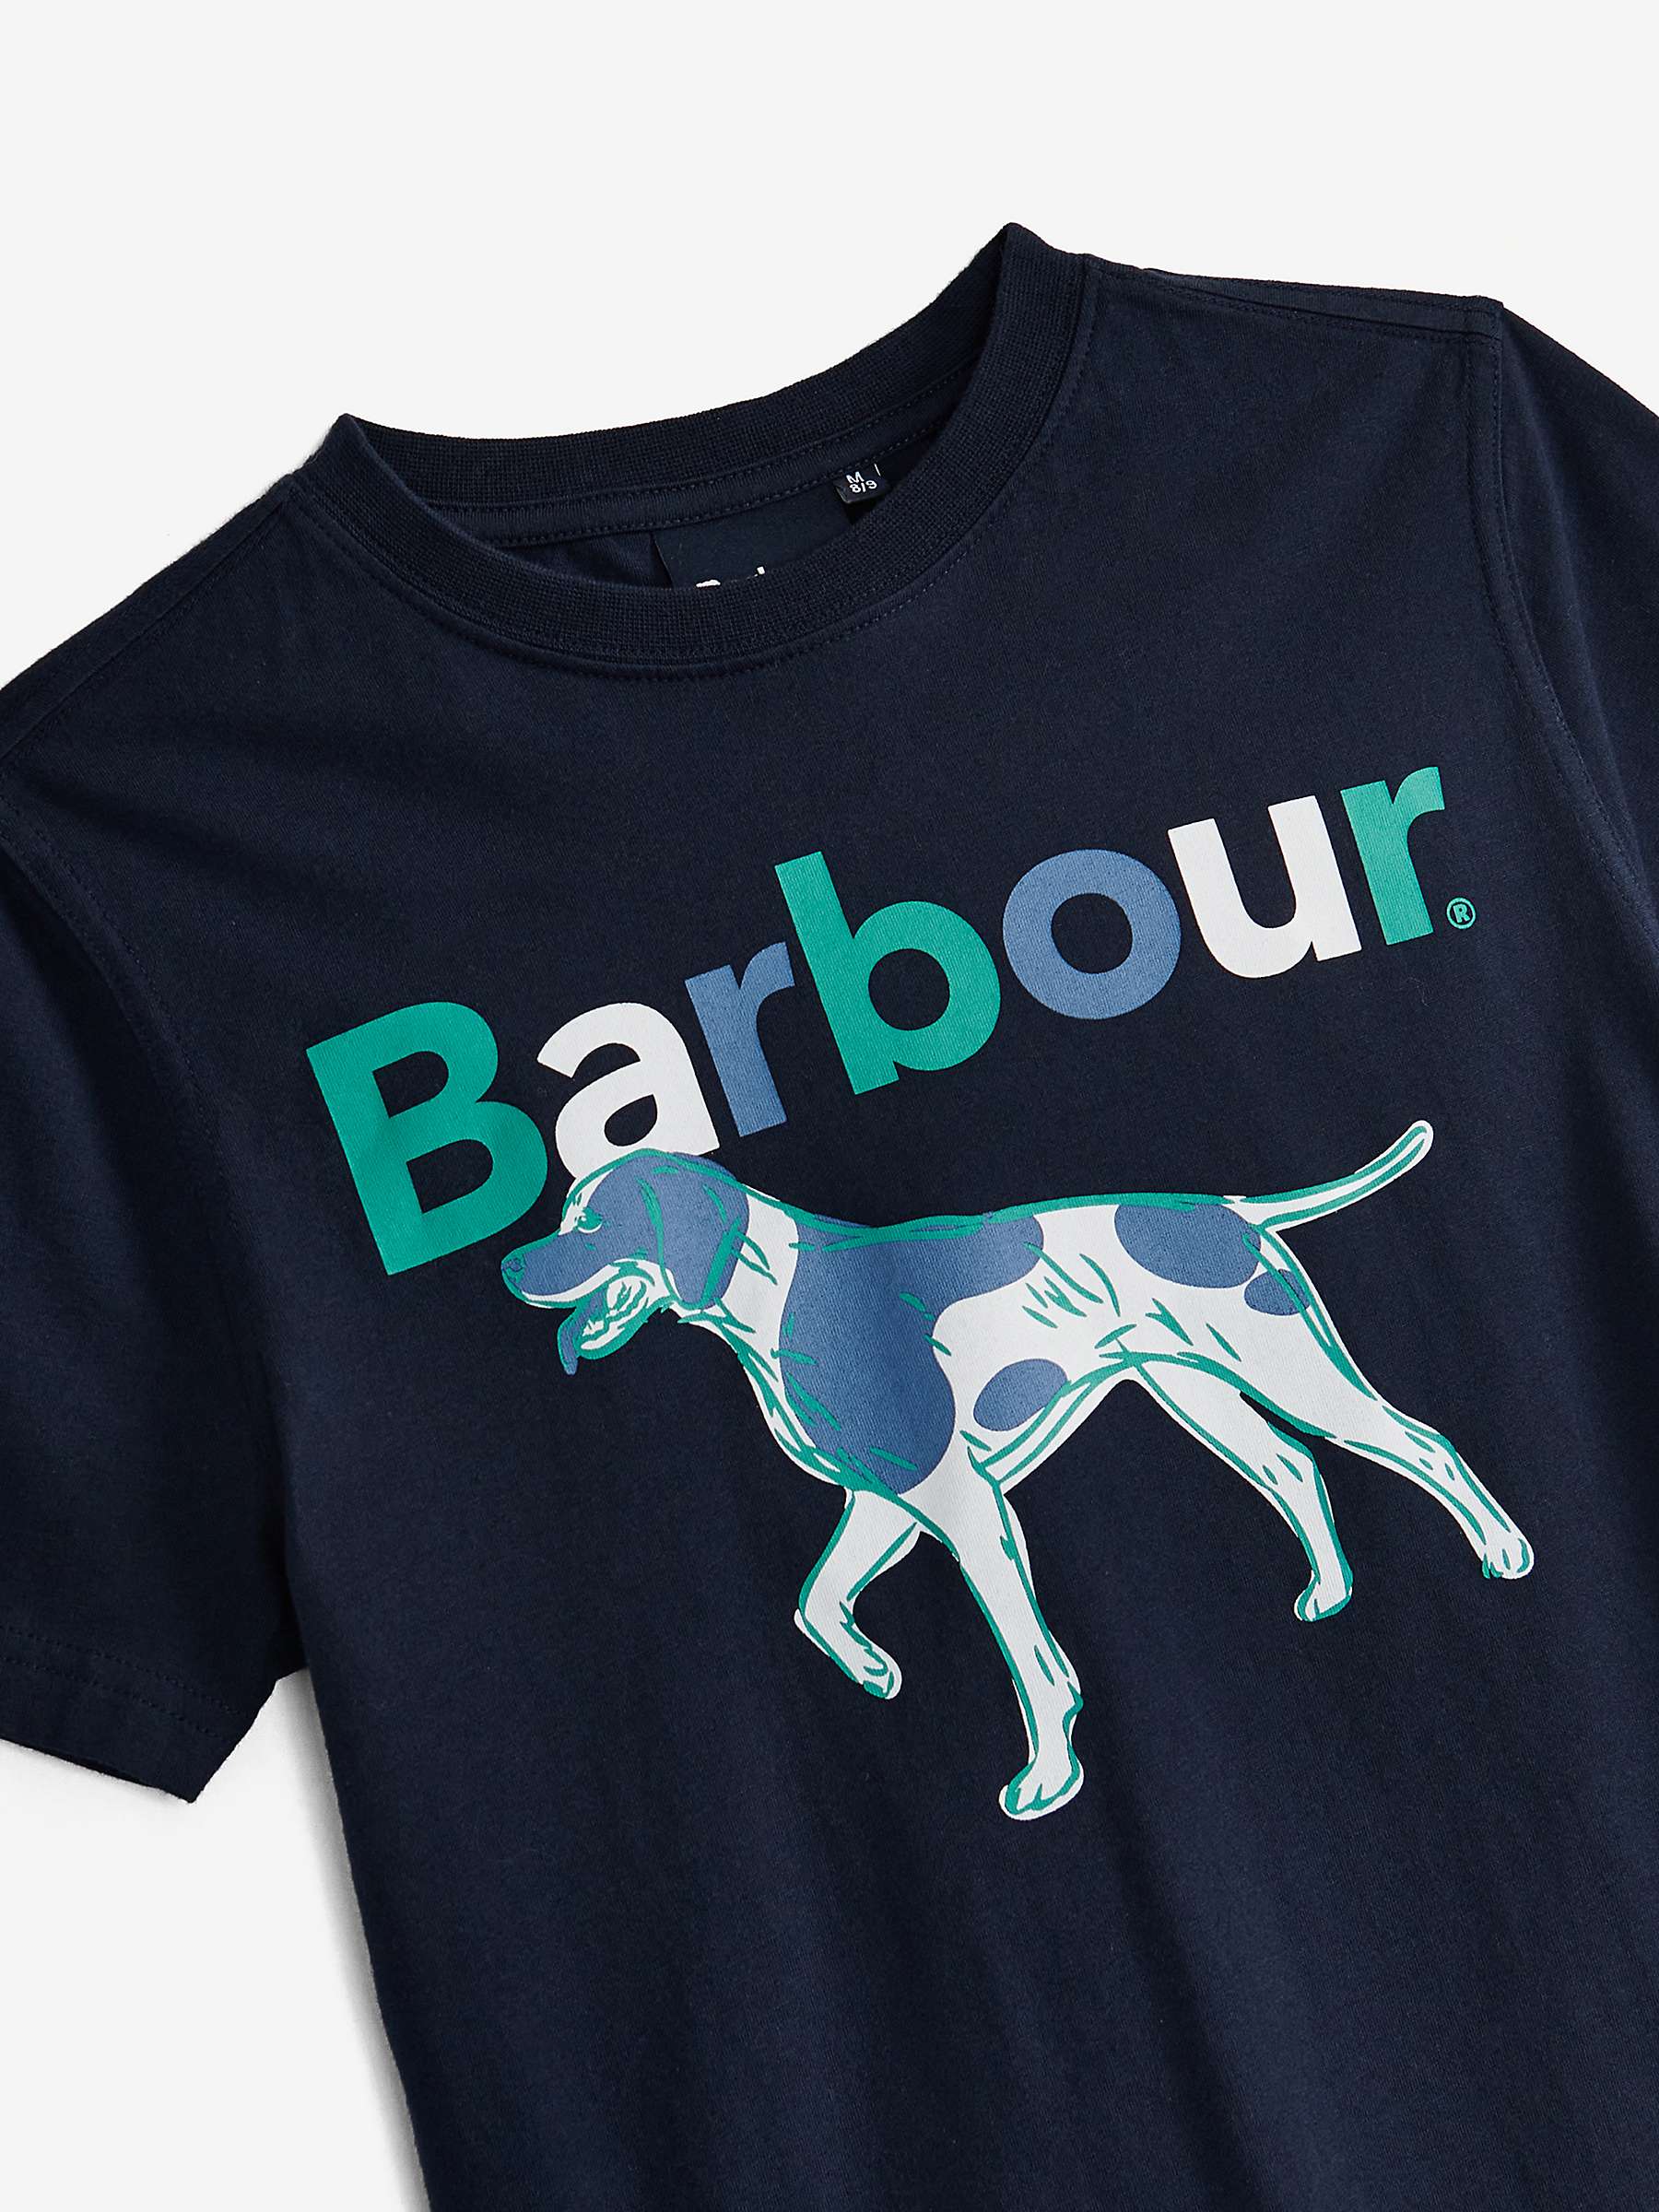 Buy Barbour Kids' Joey Short Sleeve T-Shirt, Navy Online at johnlewis.com